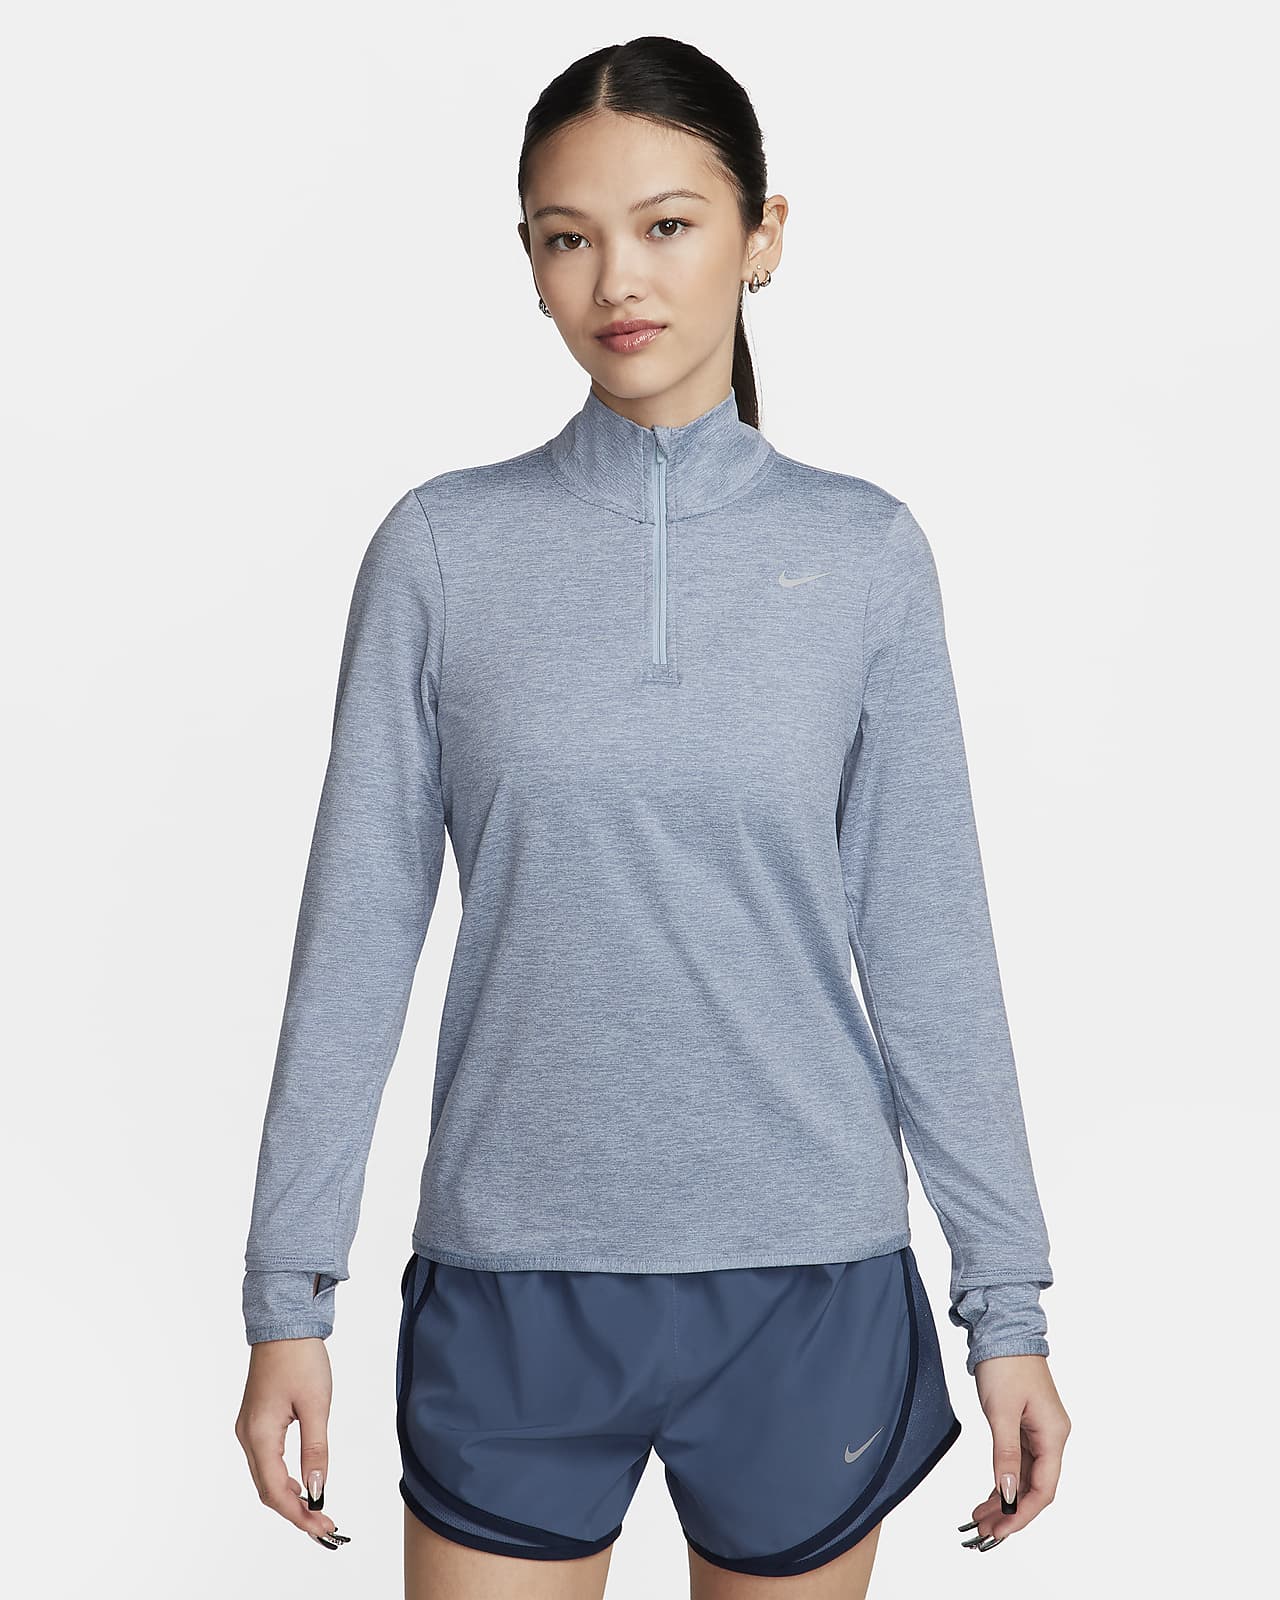 Nike Dri-FIT Swift Element UV Women's 1/4-Zip Running Top